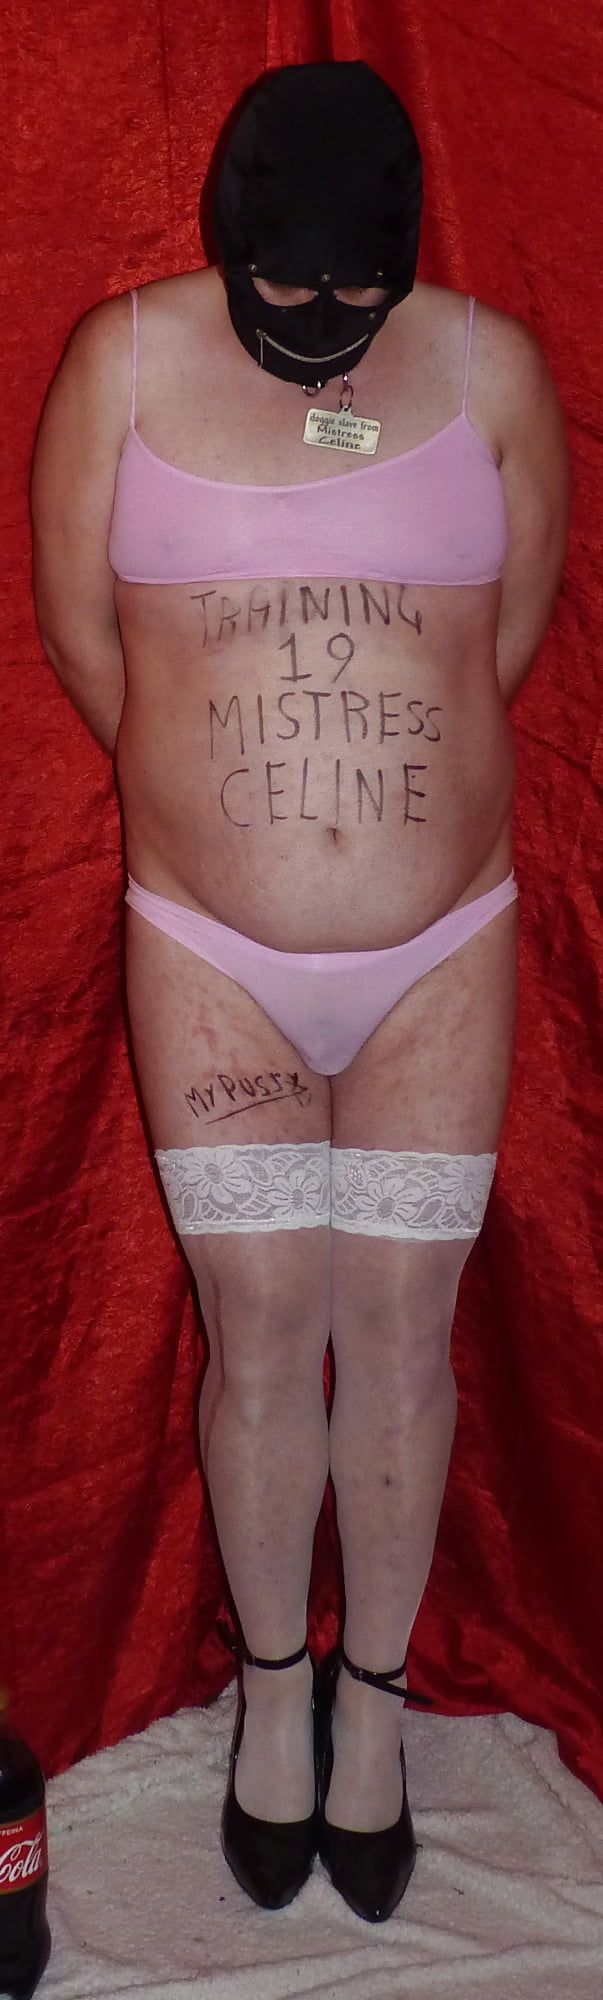 Training Day 19 - For Mistress Celine #26